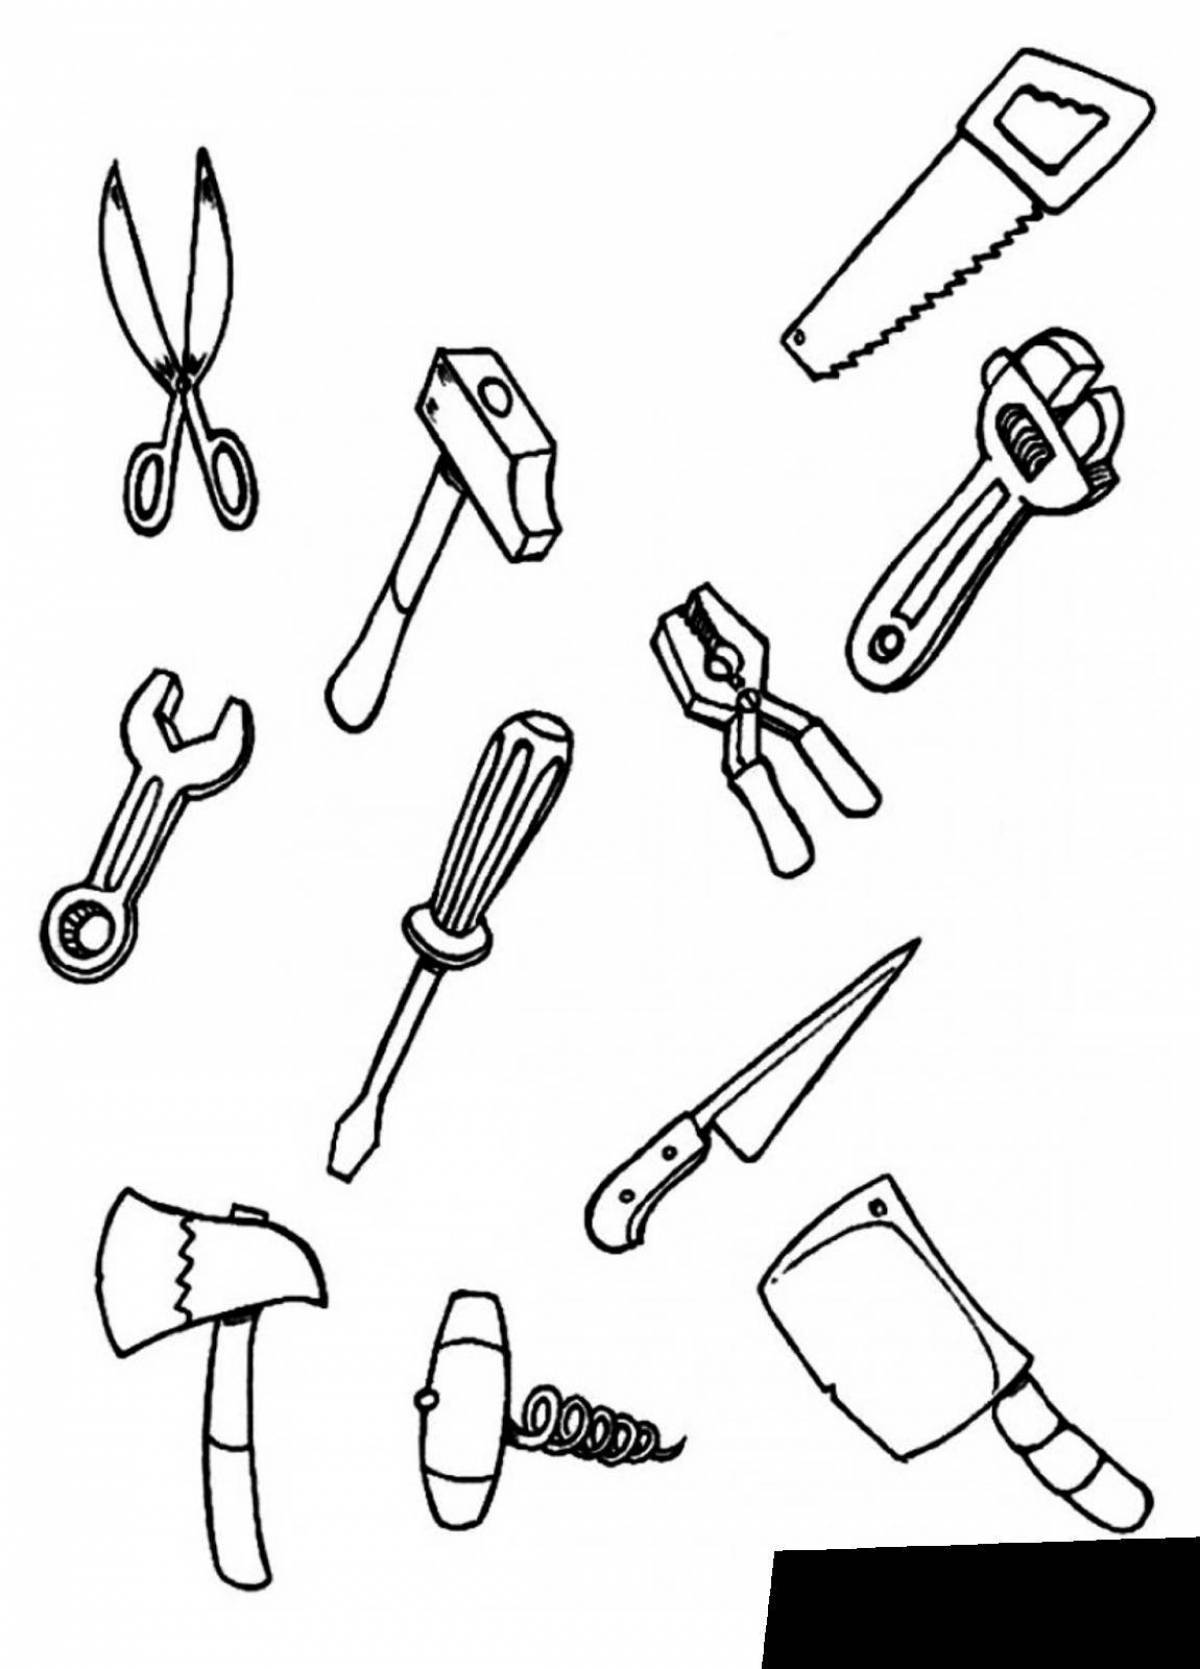 Children's tools #12